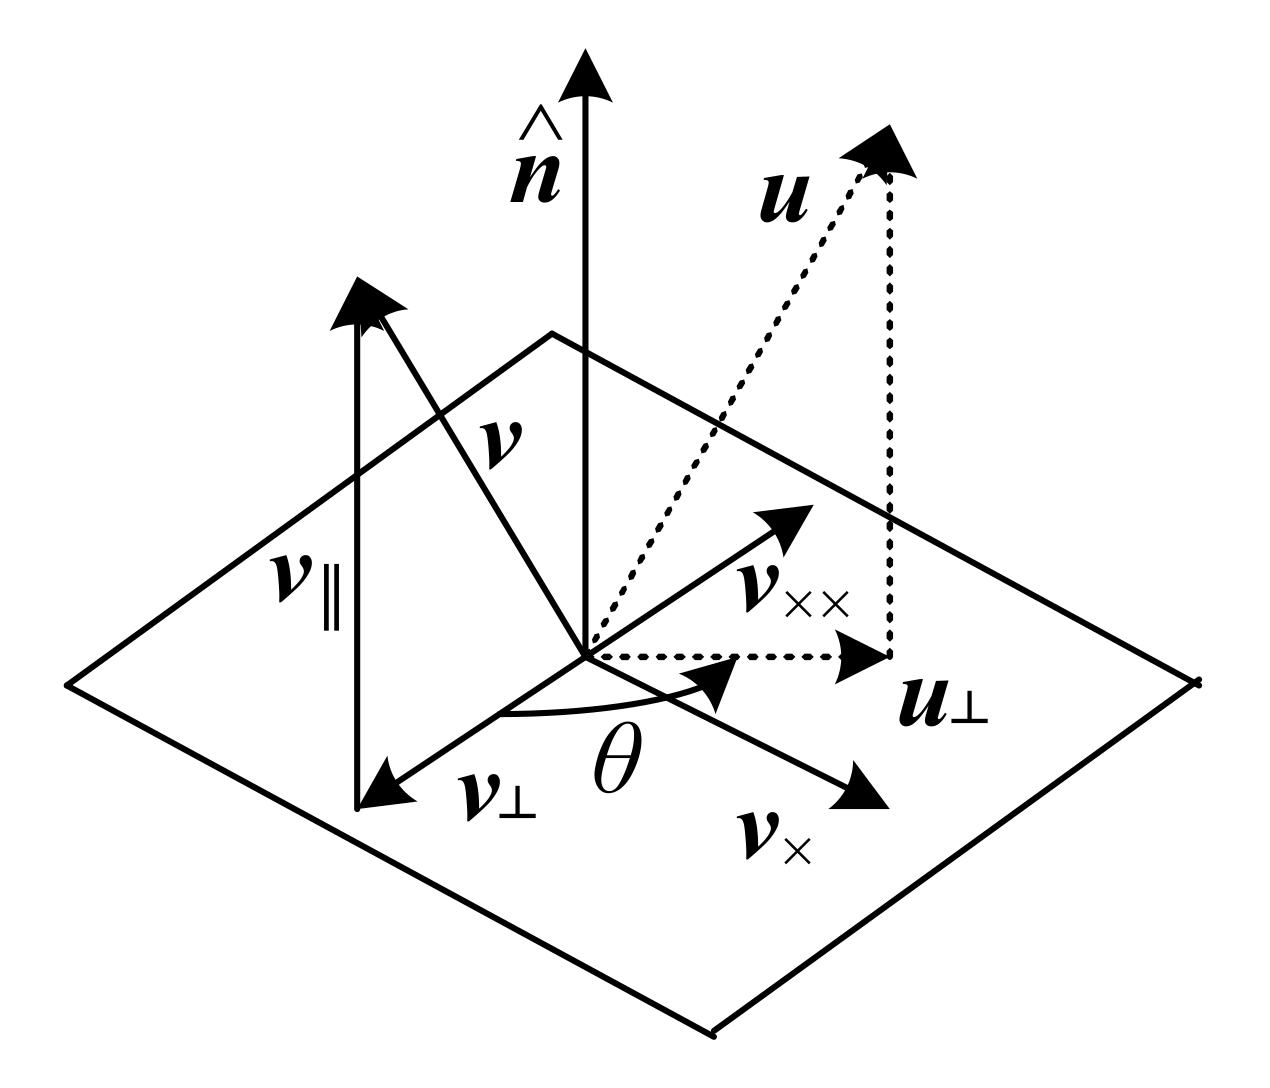 Rotation  around an axis $\hat{\mathbf{n}}$ by an angle $\theta$